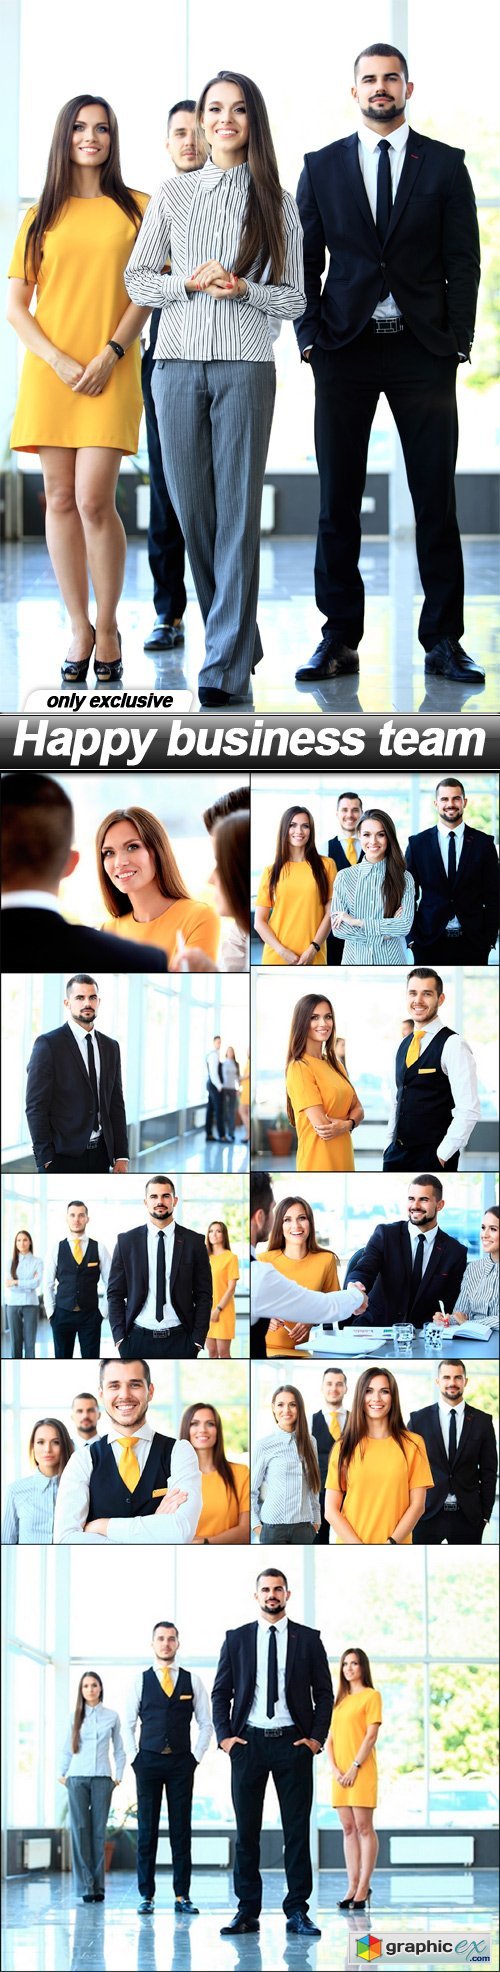 Happy business team - 10 UHQ JPEG